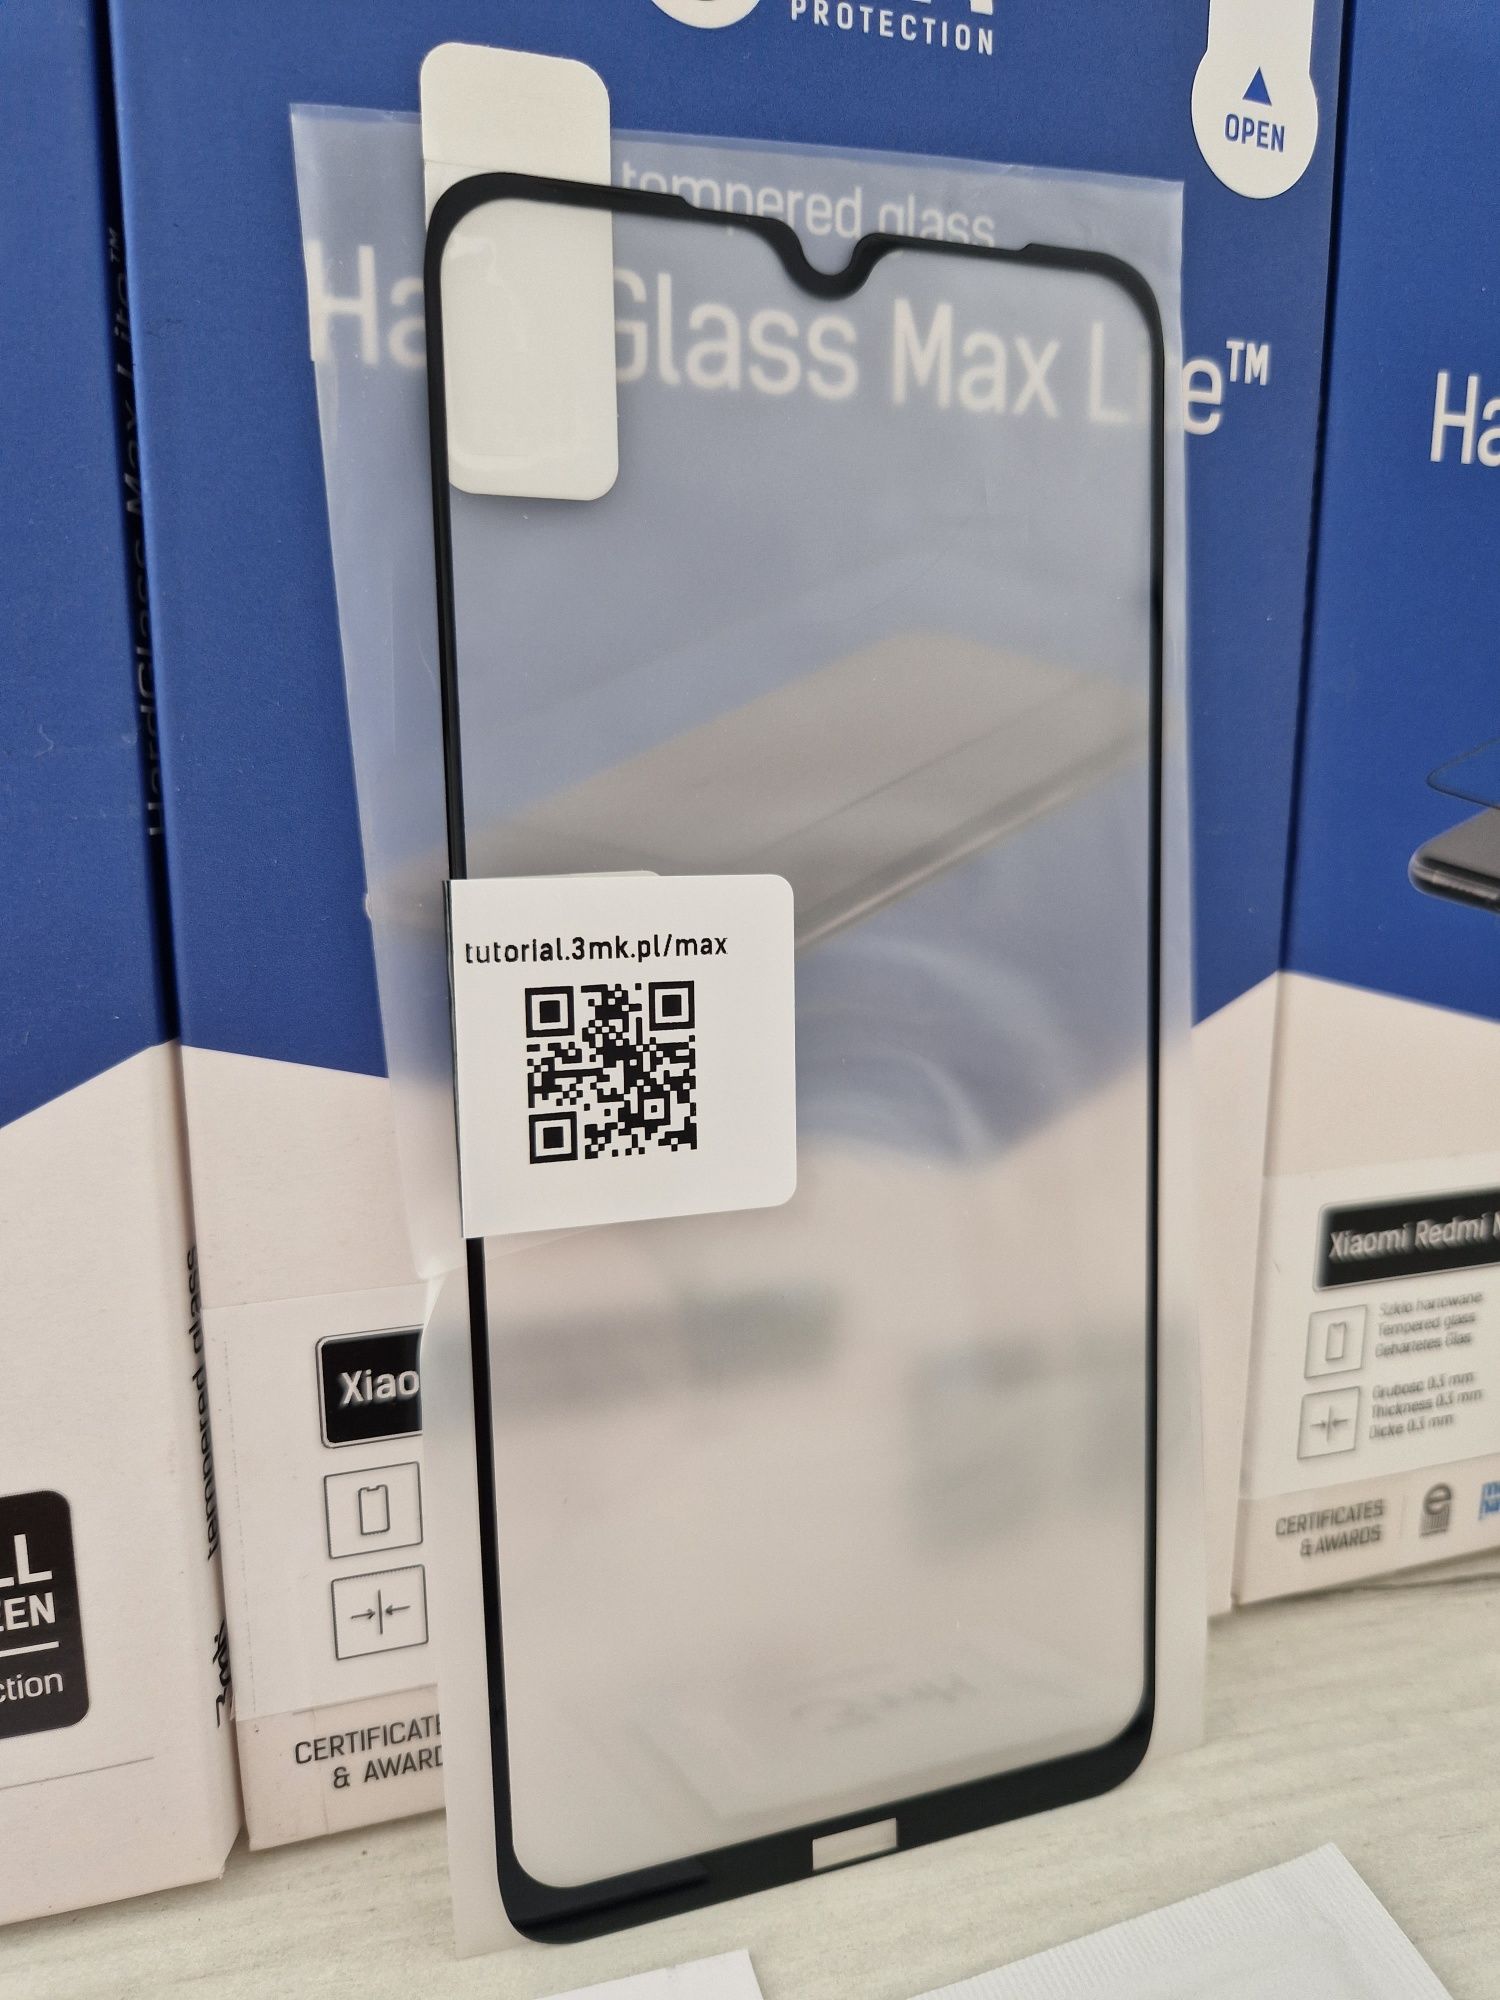 Hartowane szkło 3MK HardGlass Max Lite do Xiaomi Redmi Note 8